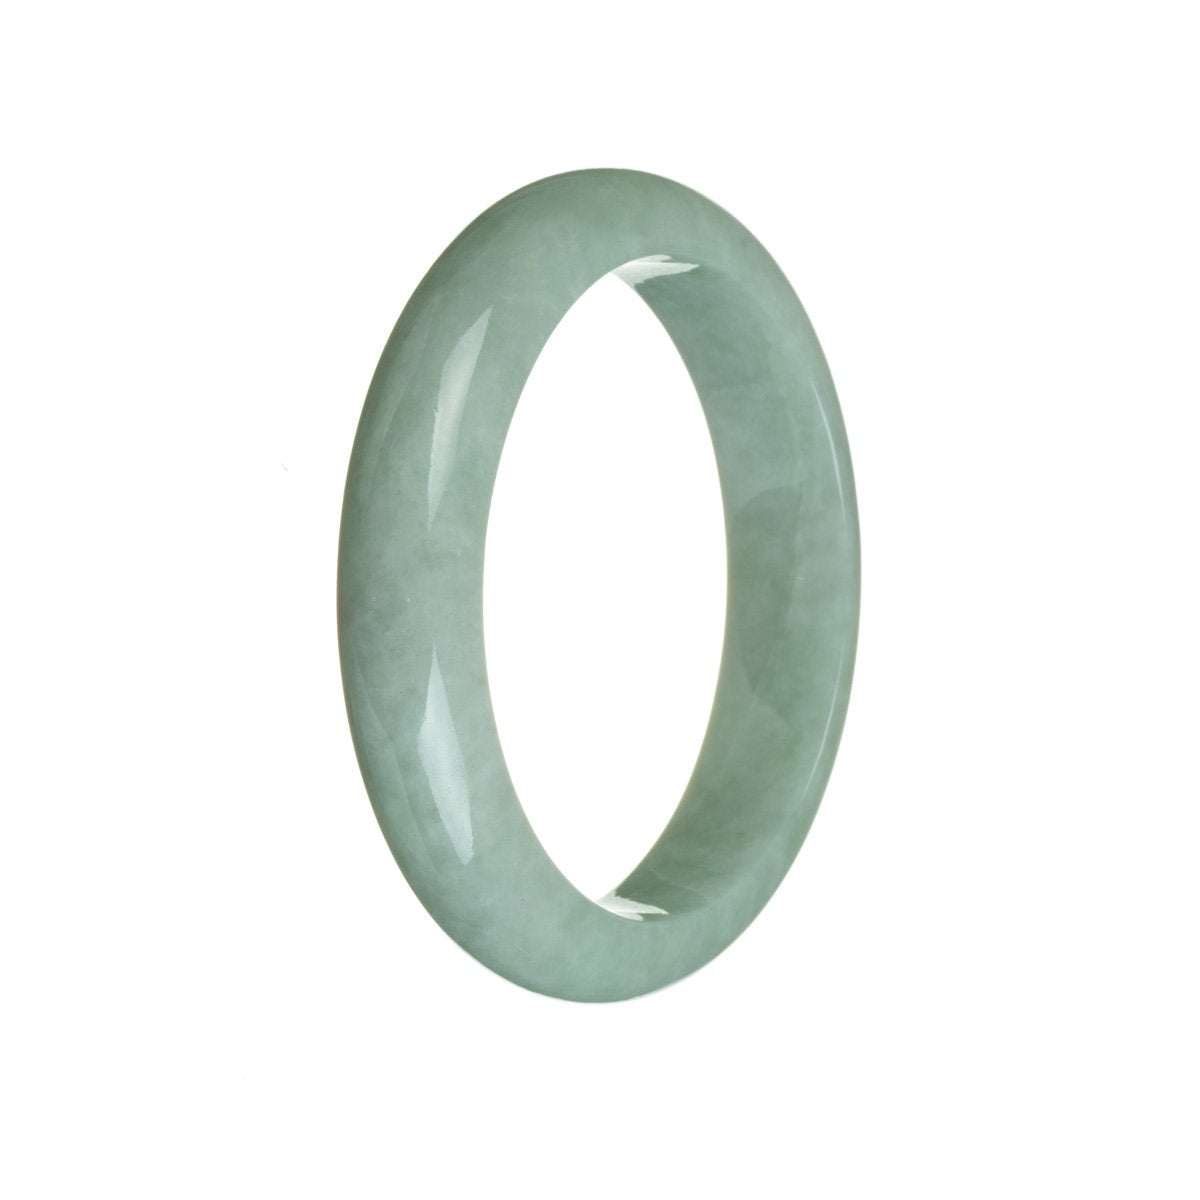 Real Type A Green Jadeite Jade Bangle - 59mm Semi Round